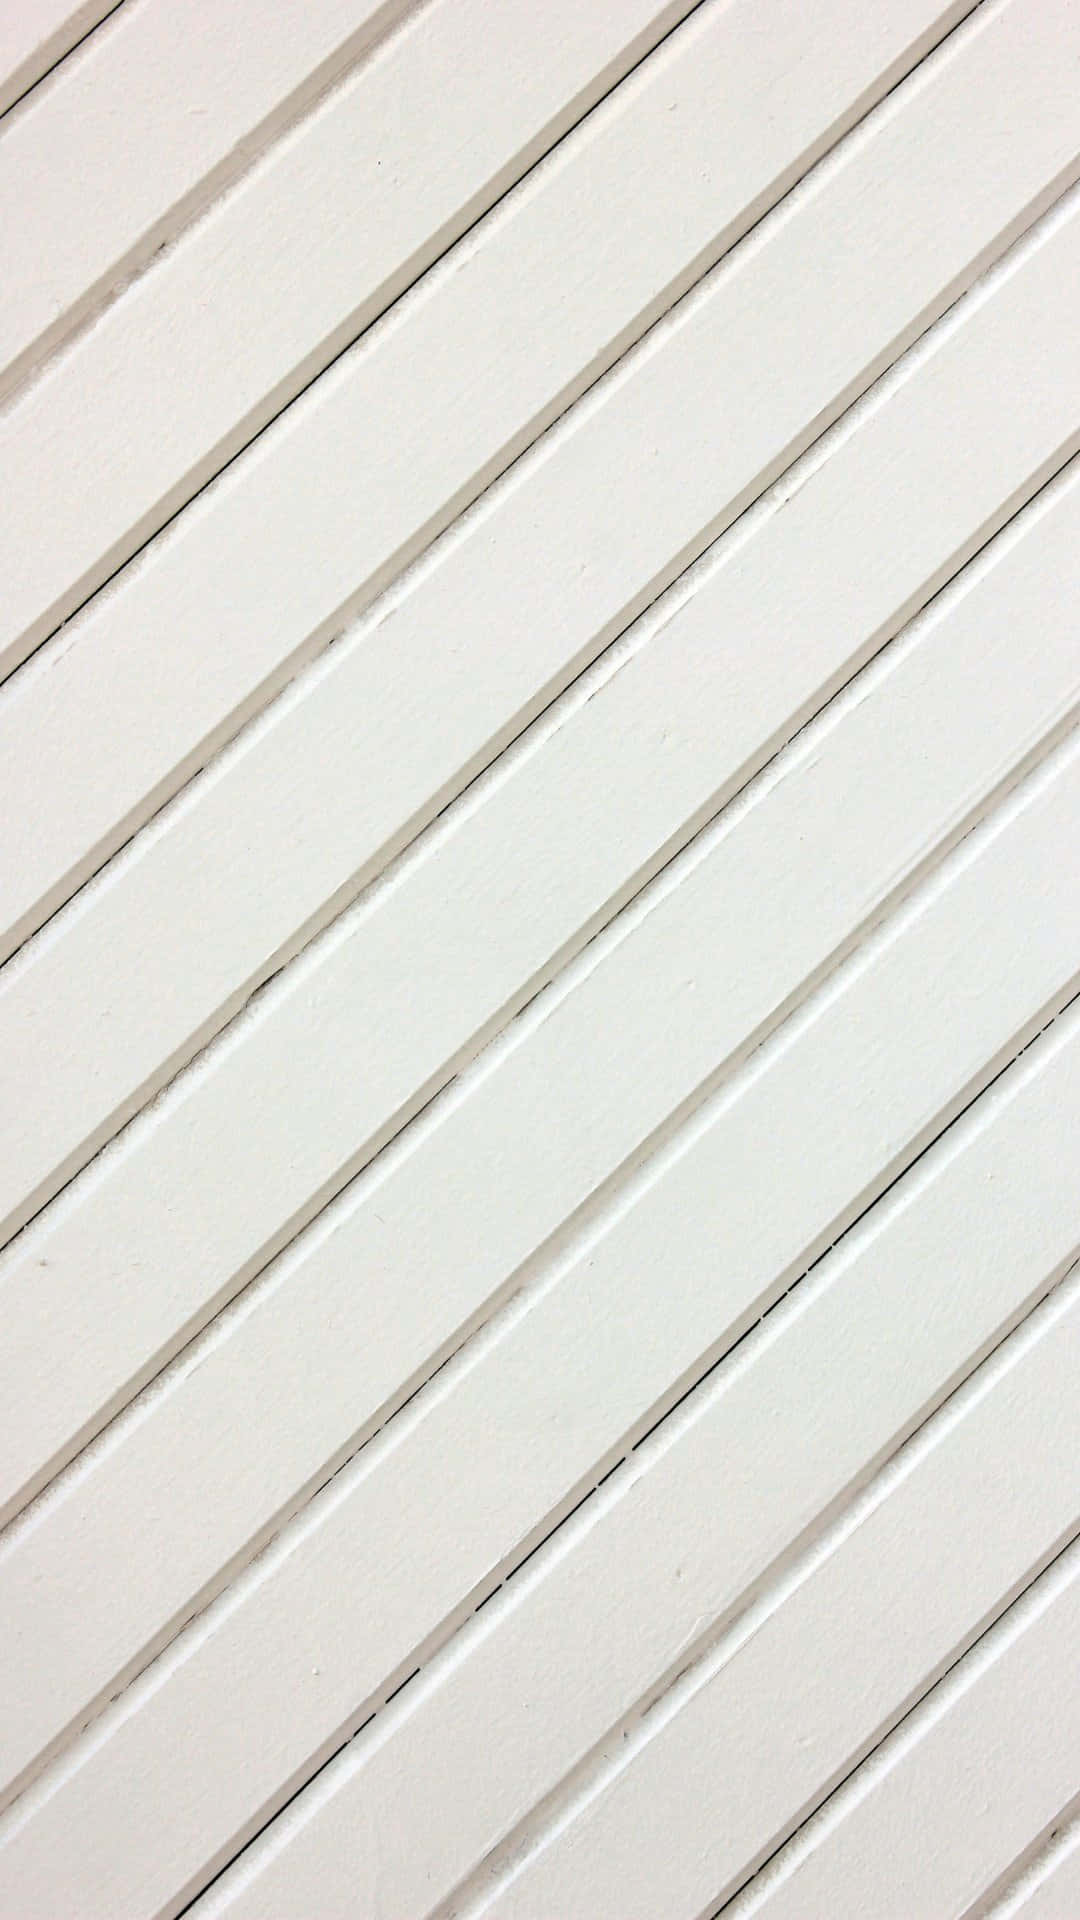 White Wooden Panel Texture Wallpaper